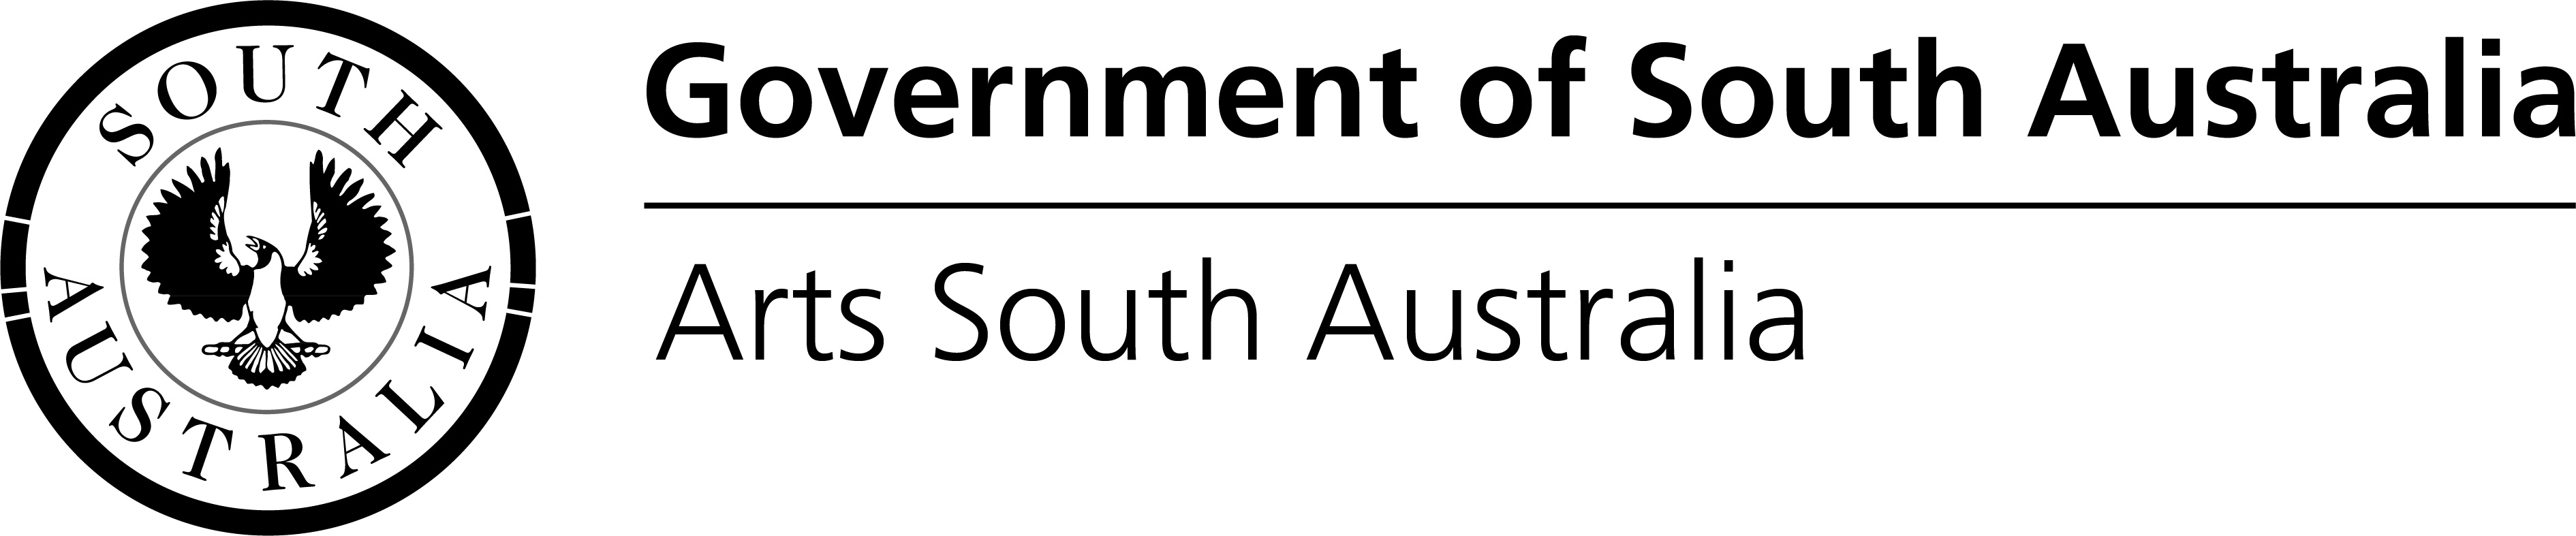 Government of South Australia, Arts South Australia